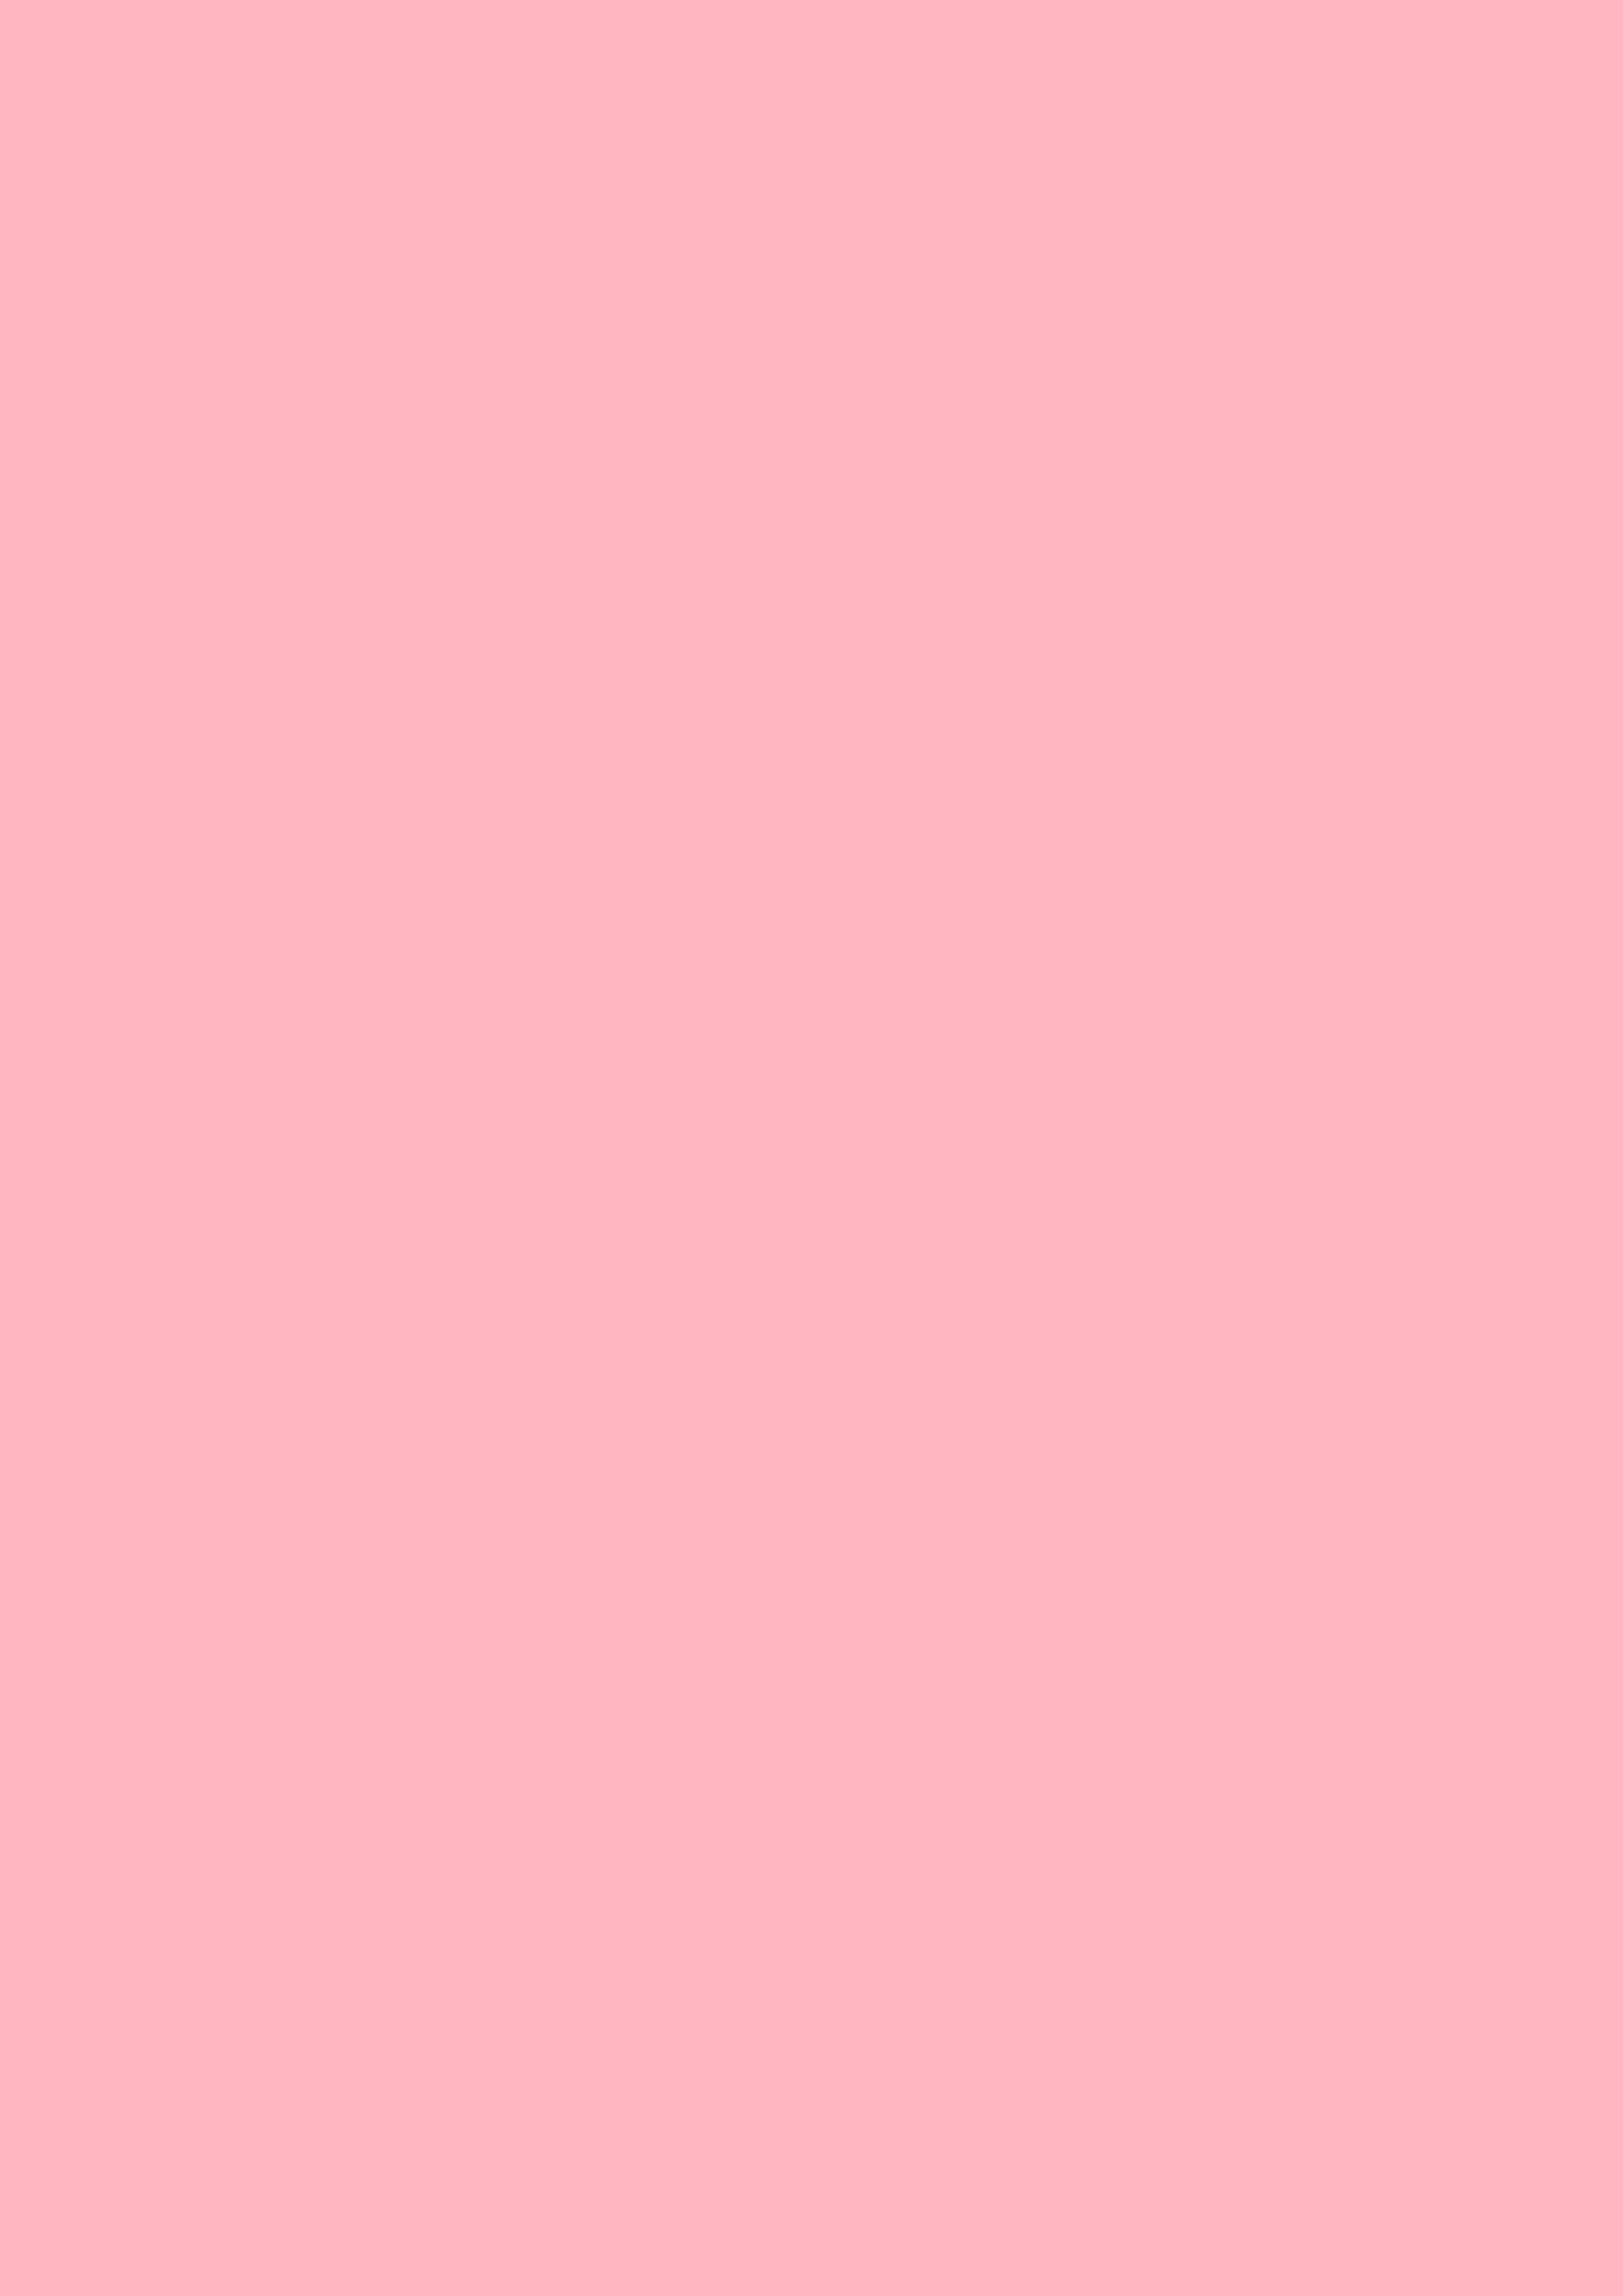 2480x3508 Light Pink Solid Color Background